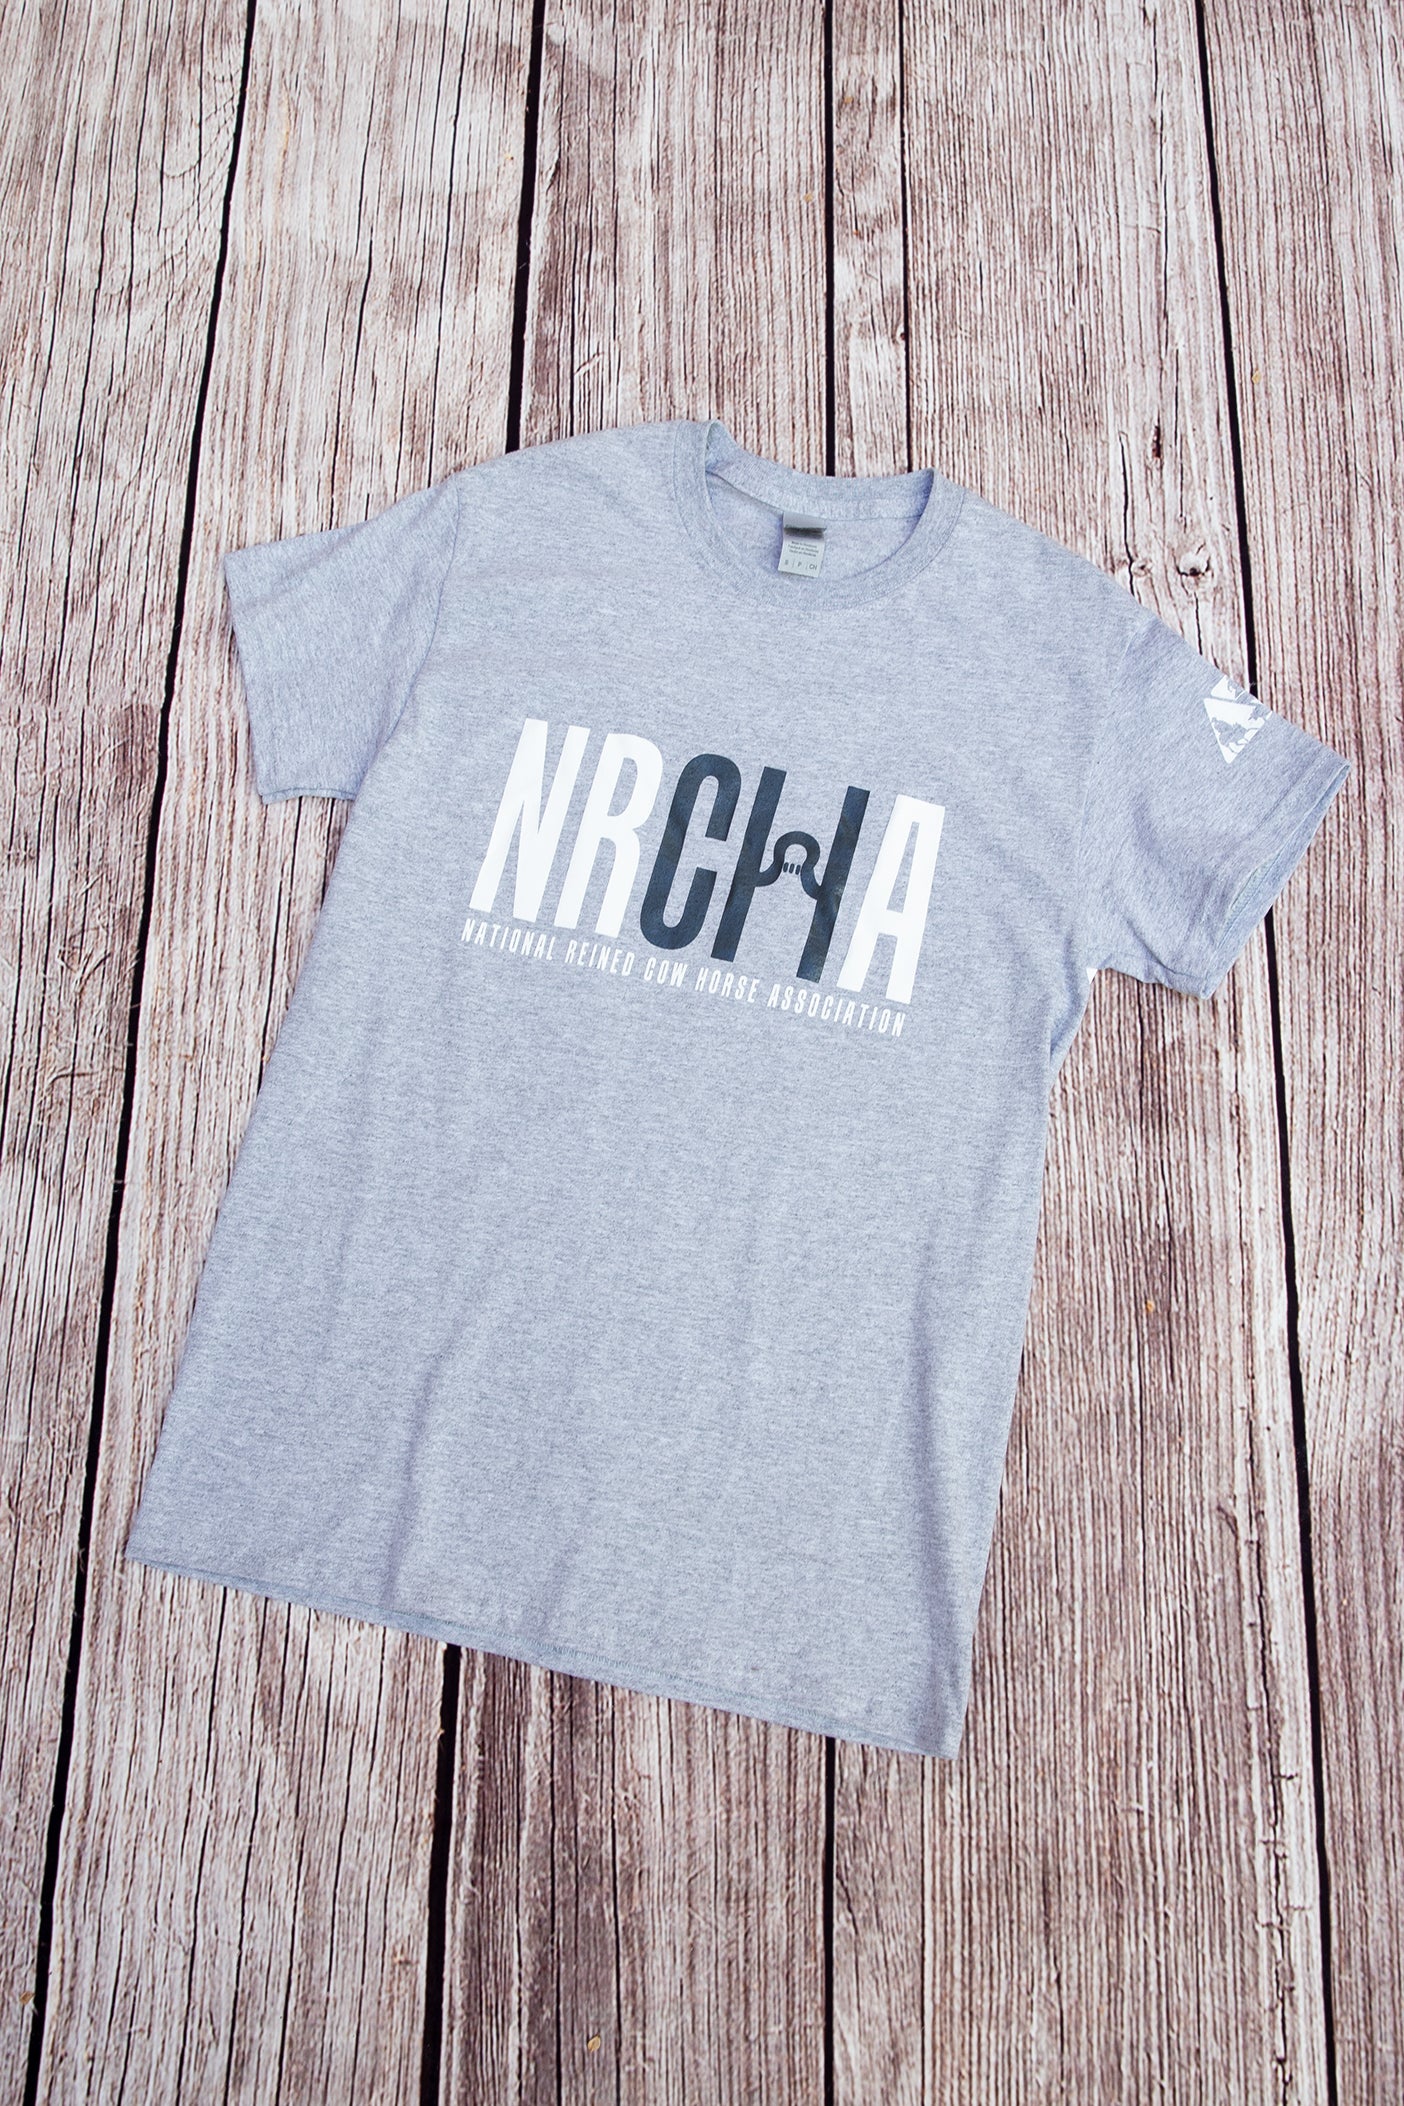 Men's NRCHA Short Sleeve Grey T-Shirt